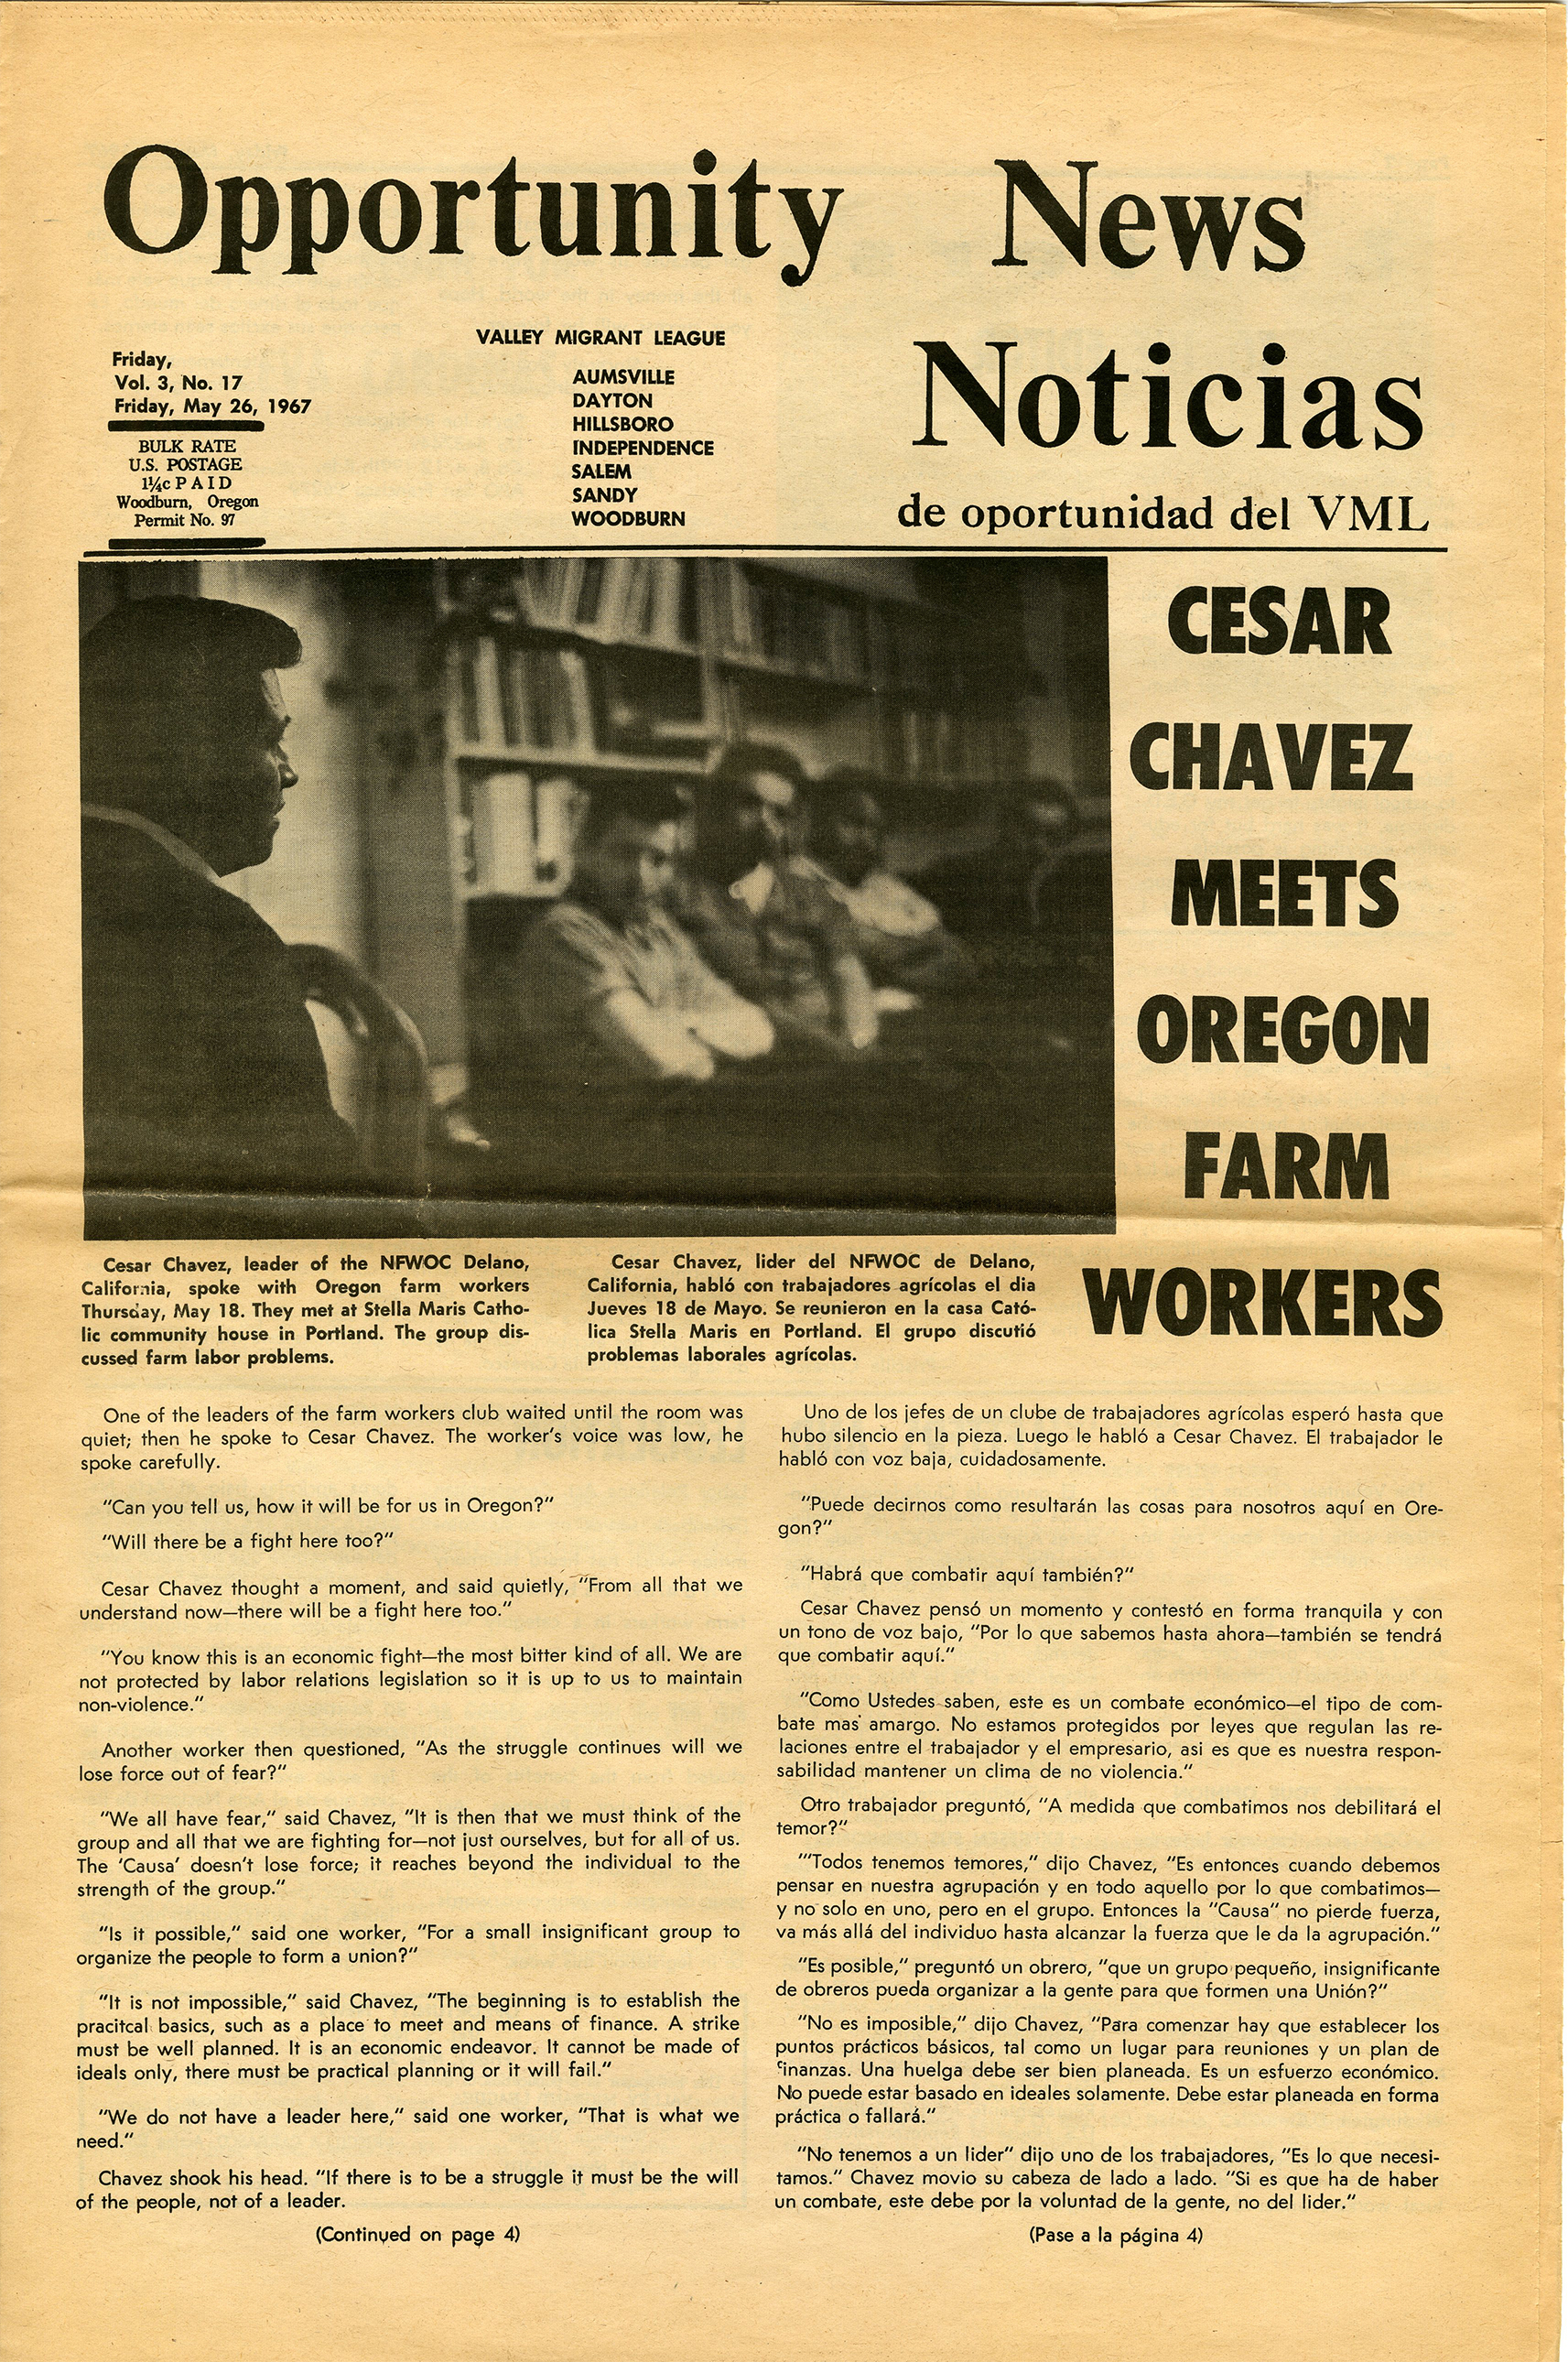  Preview of previous document: 4. Noticias de oportunidad del VML/Opportunity News, 1967